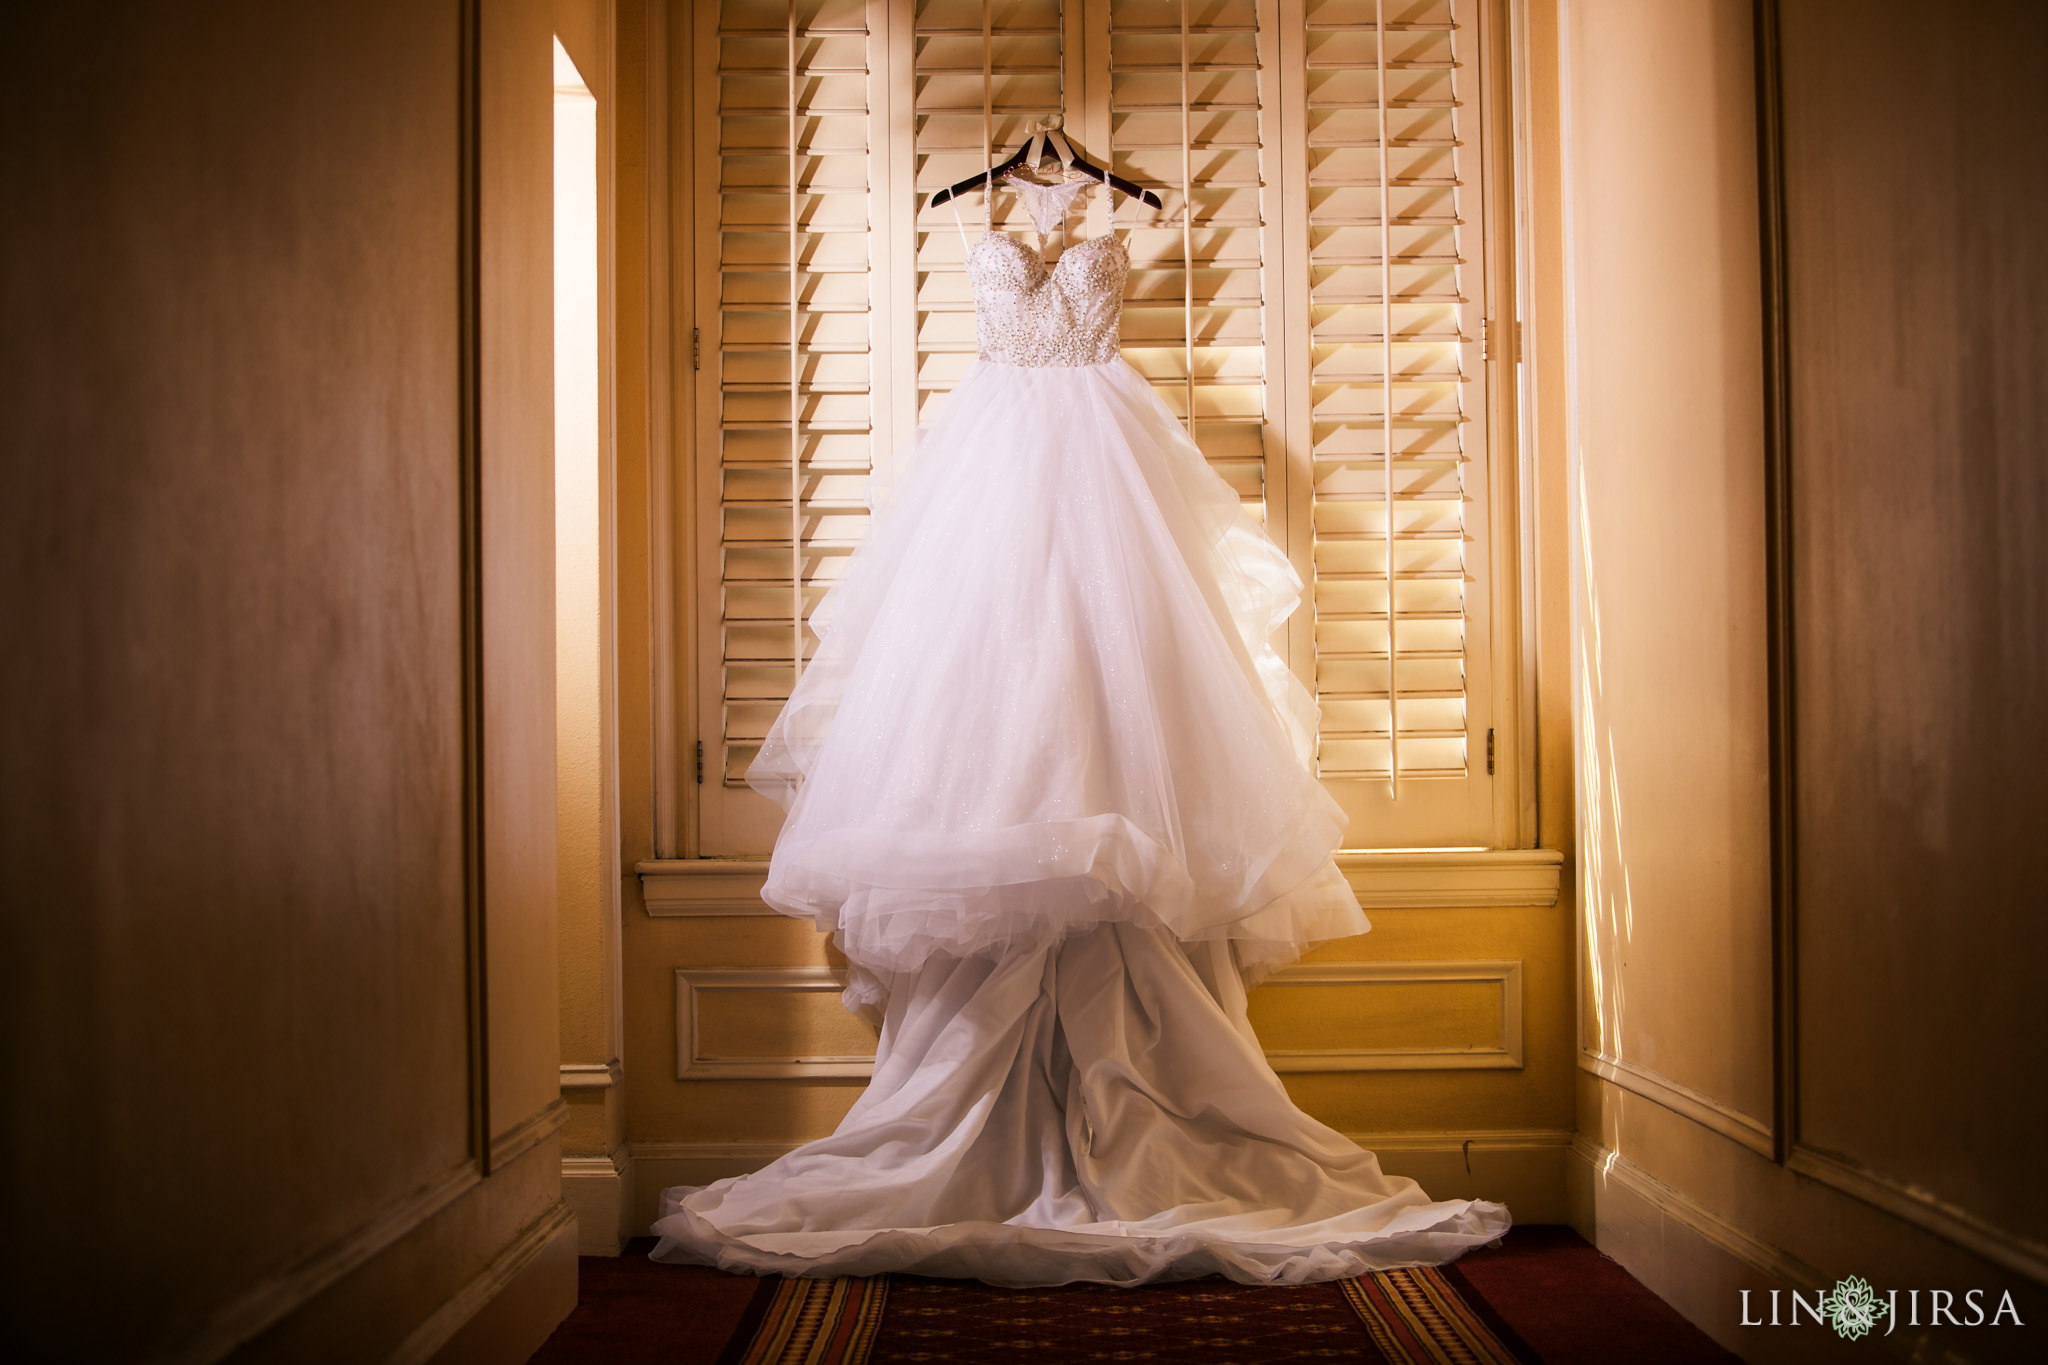 01 millennium biltmore hotel los angeles wedding photography